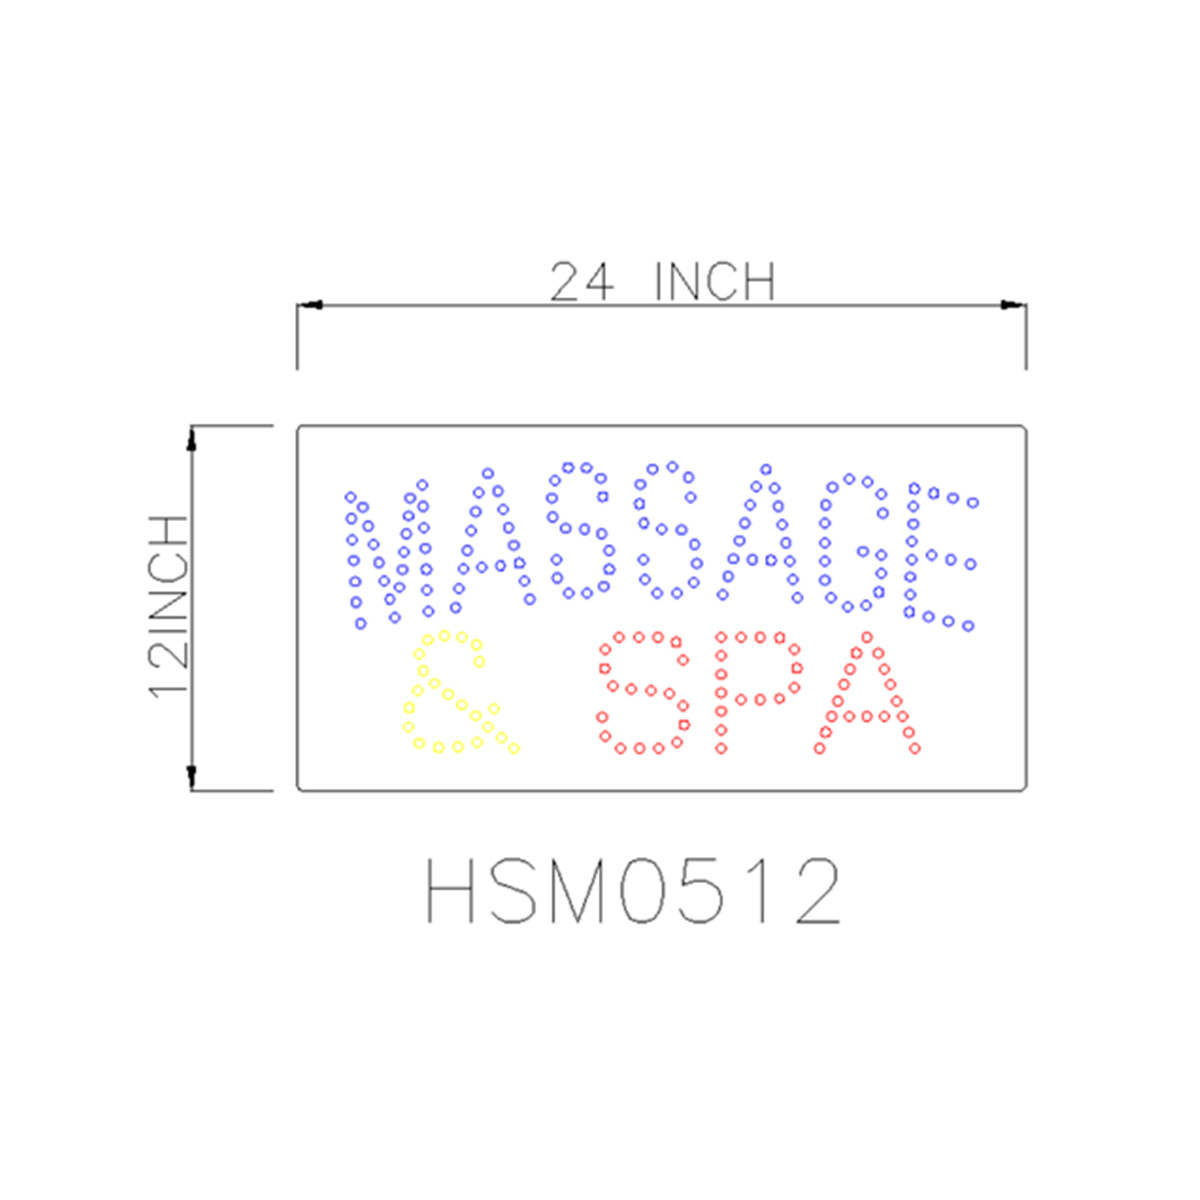 massage spa led sign